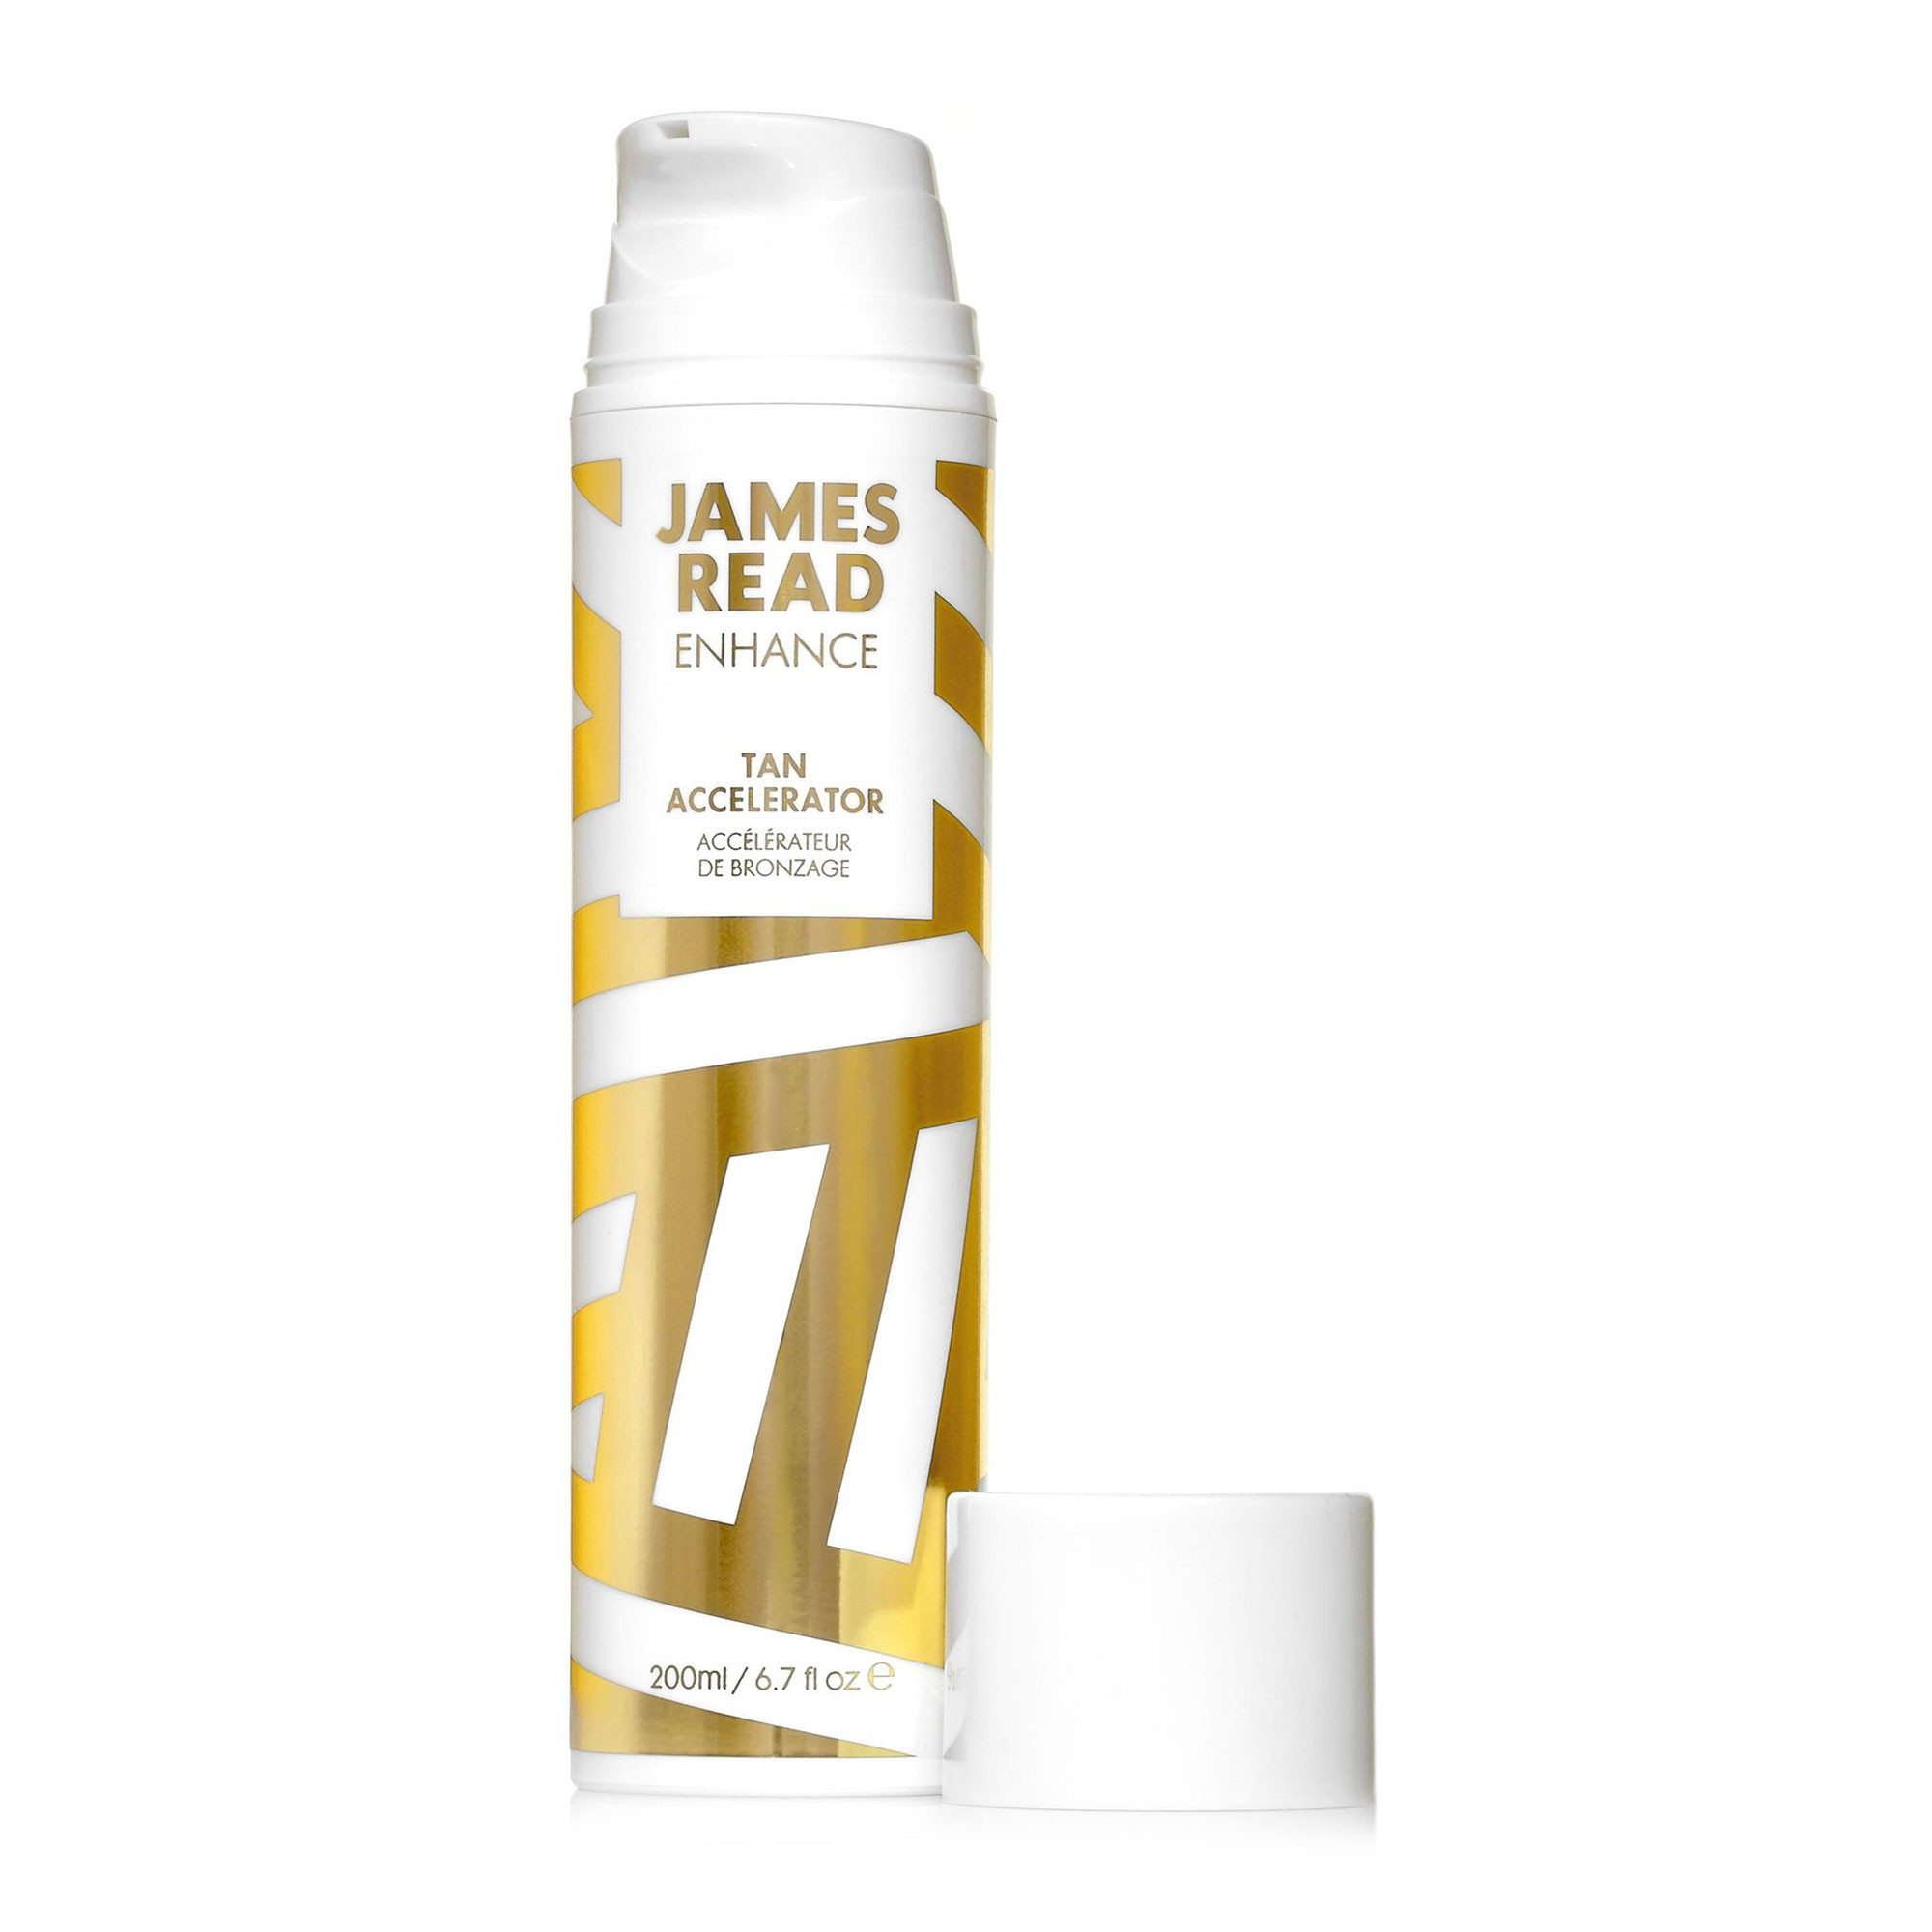 James Read Tan Accelerator Face and Body Усилитель загара для лица и тела